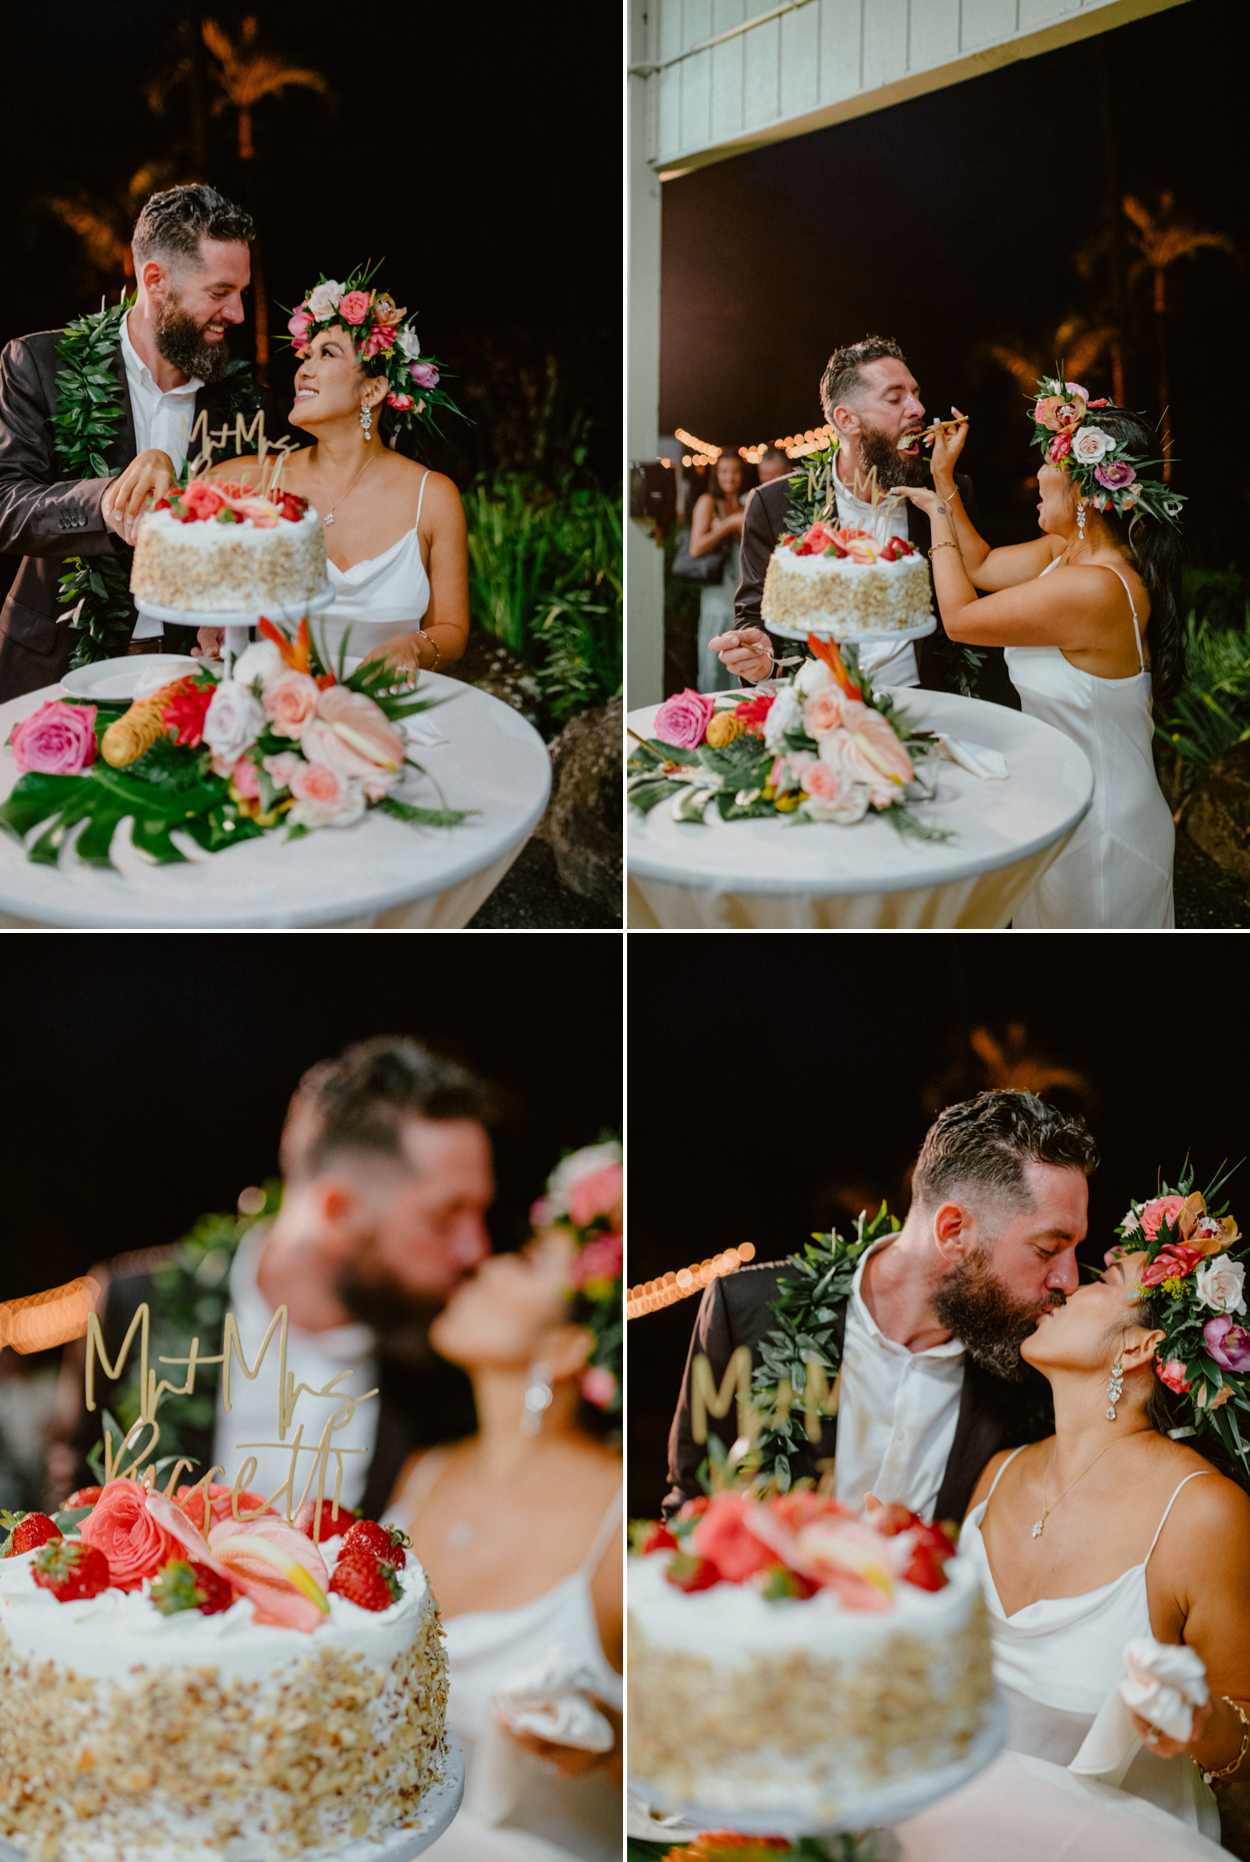 Moli'i fishpond Hawaii wedding cake and couples kiss